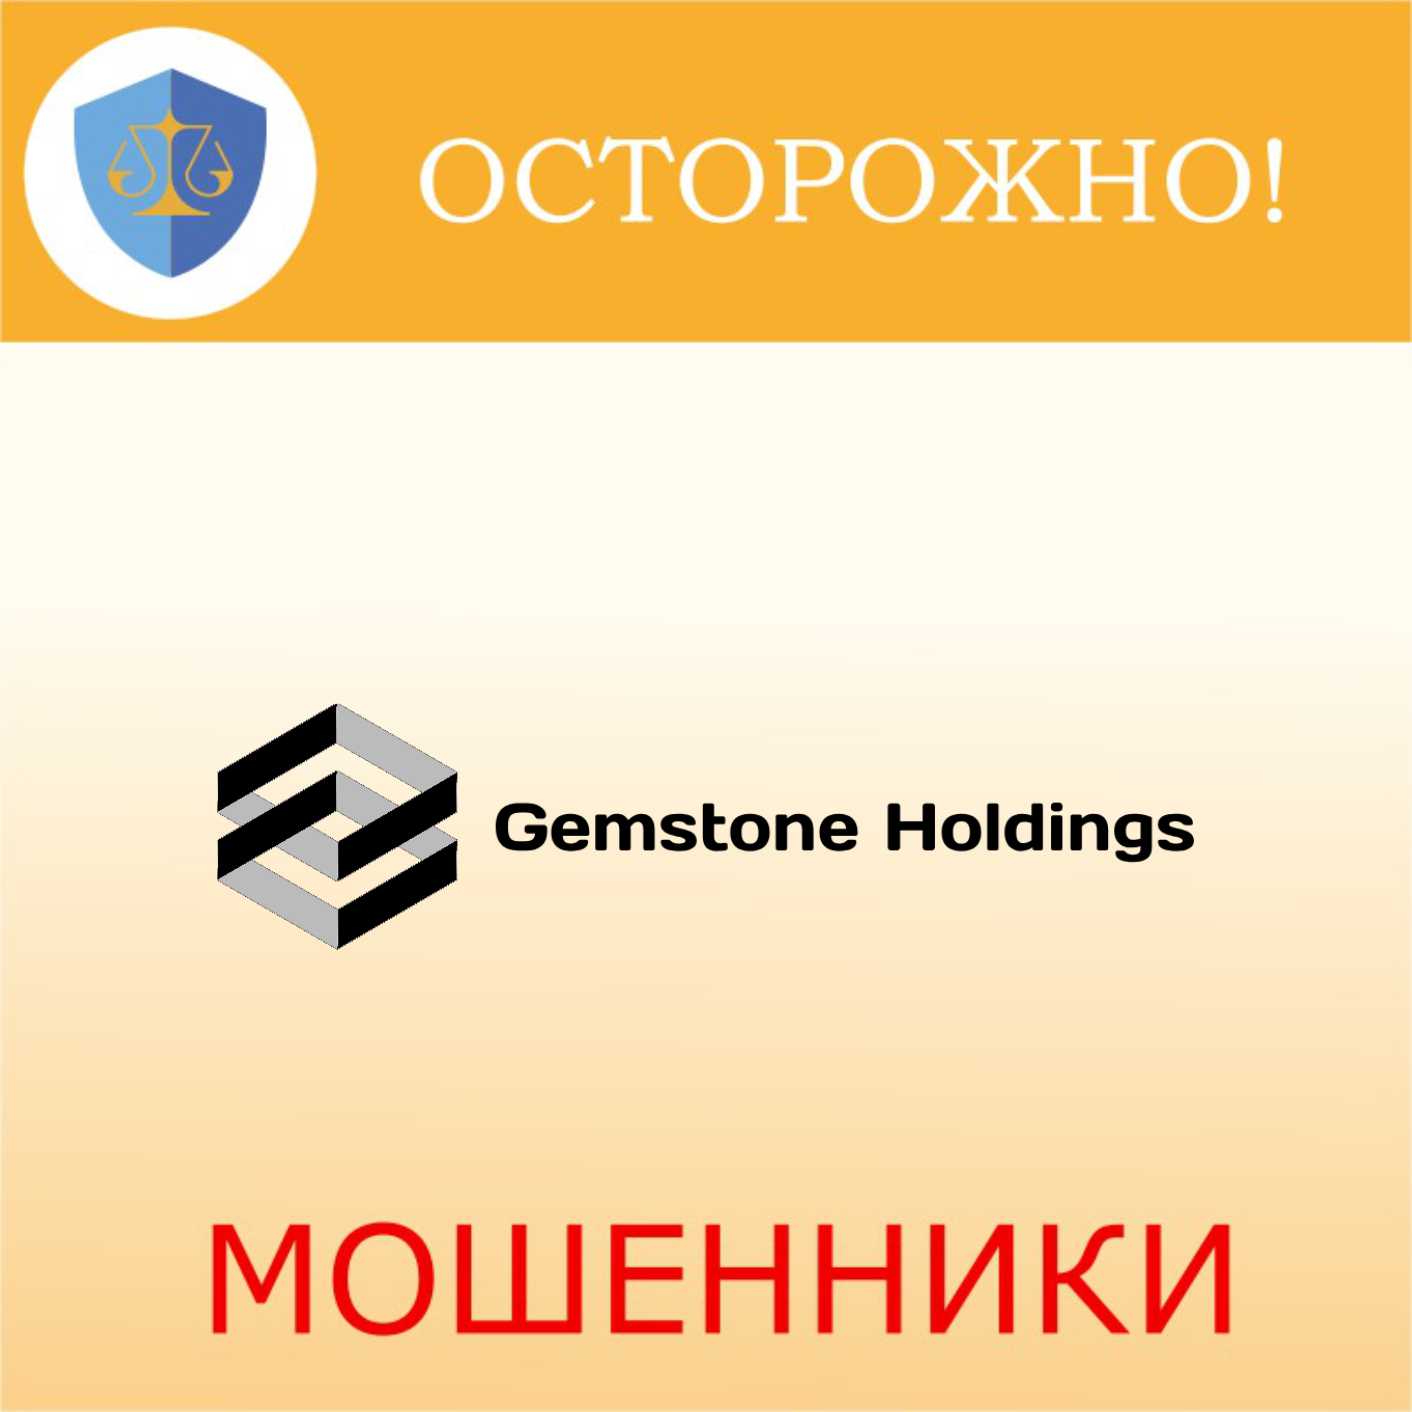 Gemstone Holdings